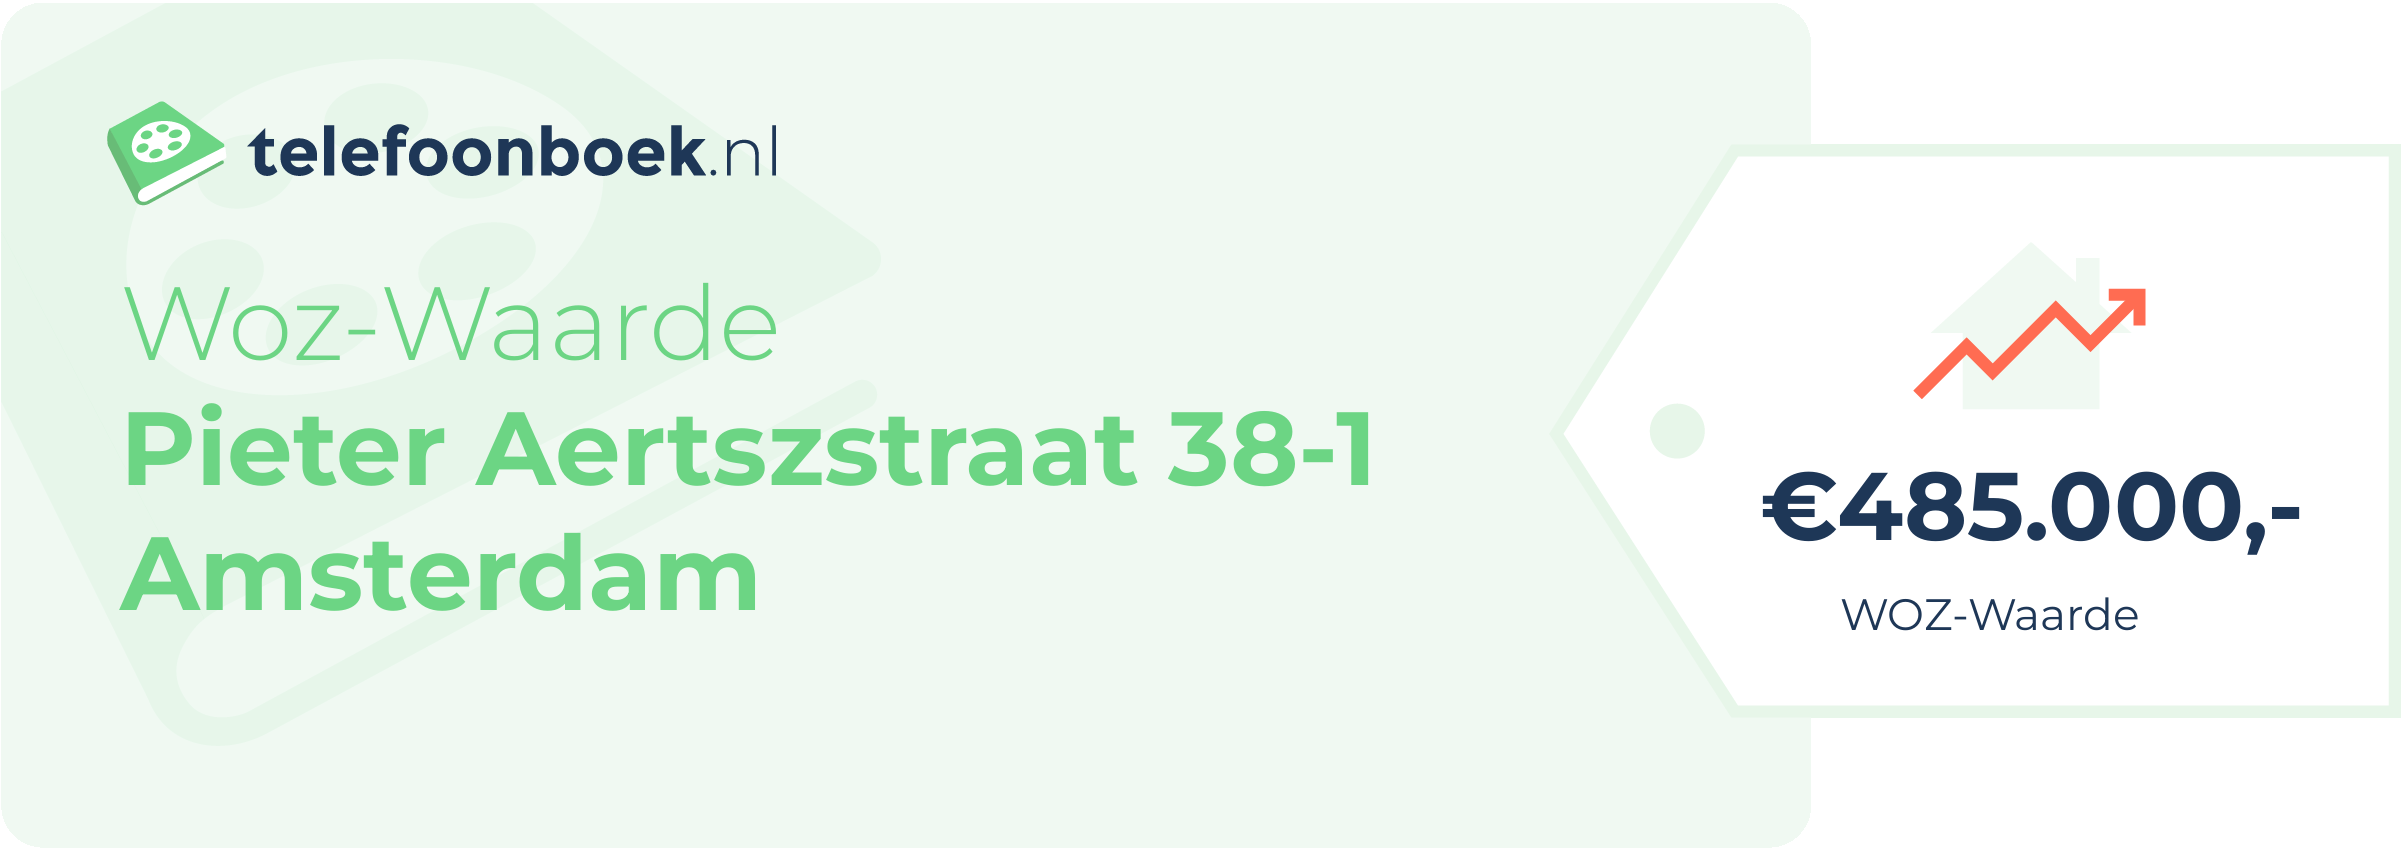 WOZ-waarde Pieter Aertszstraat 38-1 Amsterdam